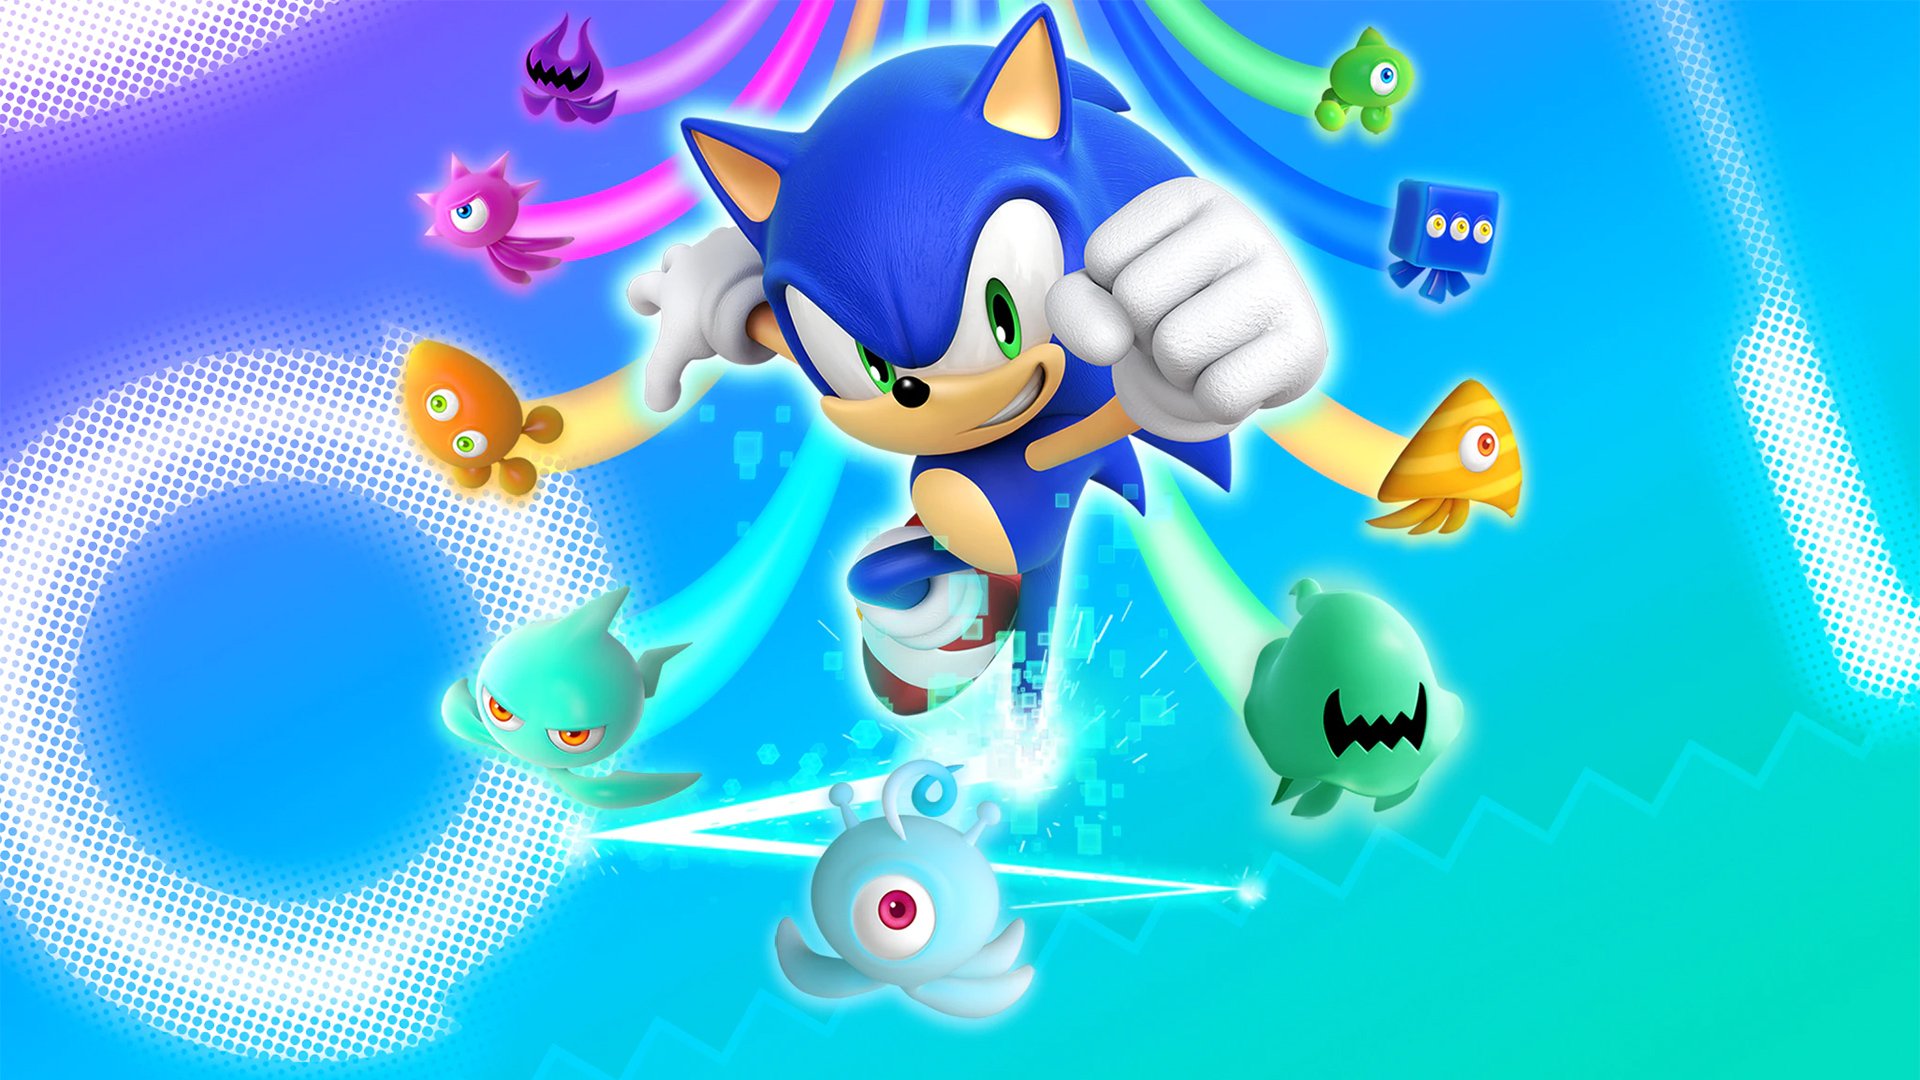 Sonic Colors: Ultimate Nintendo Switch, Nintendo Switch Lite